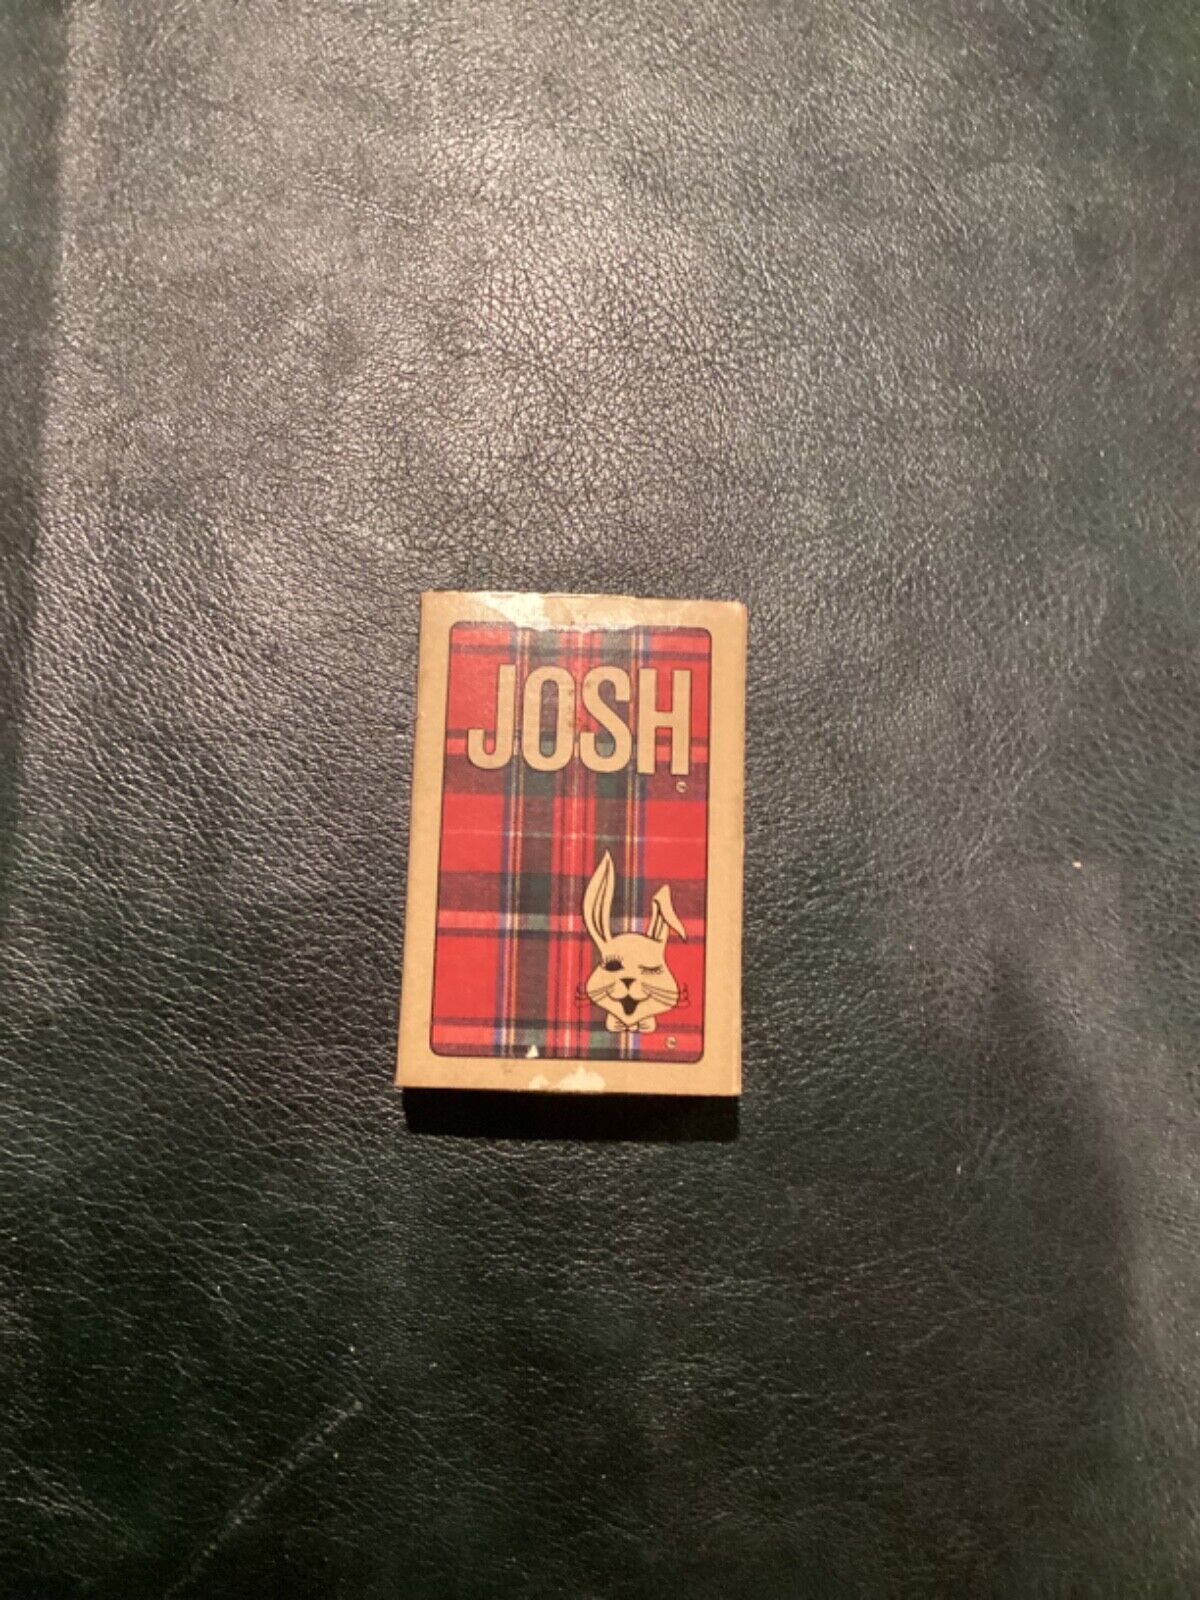 Vintage deck of Josh Cards